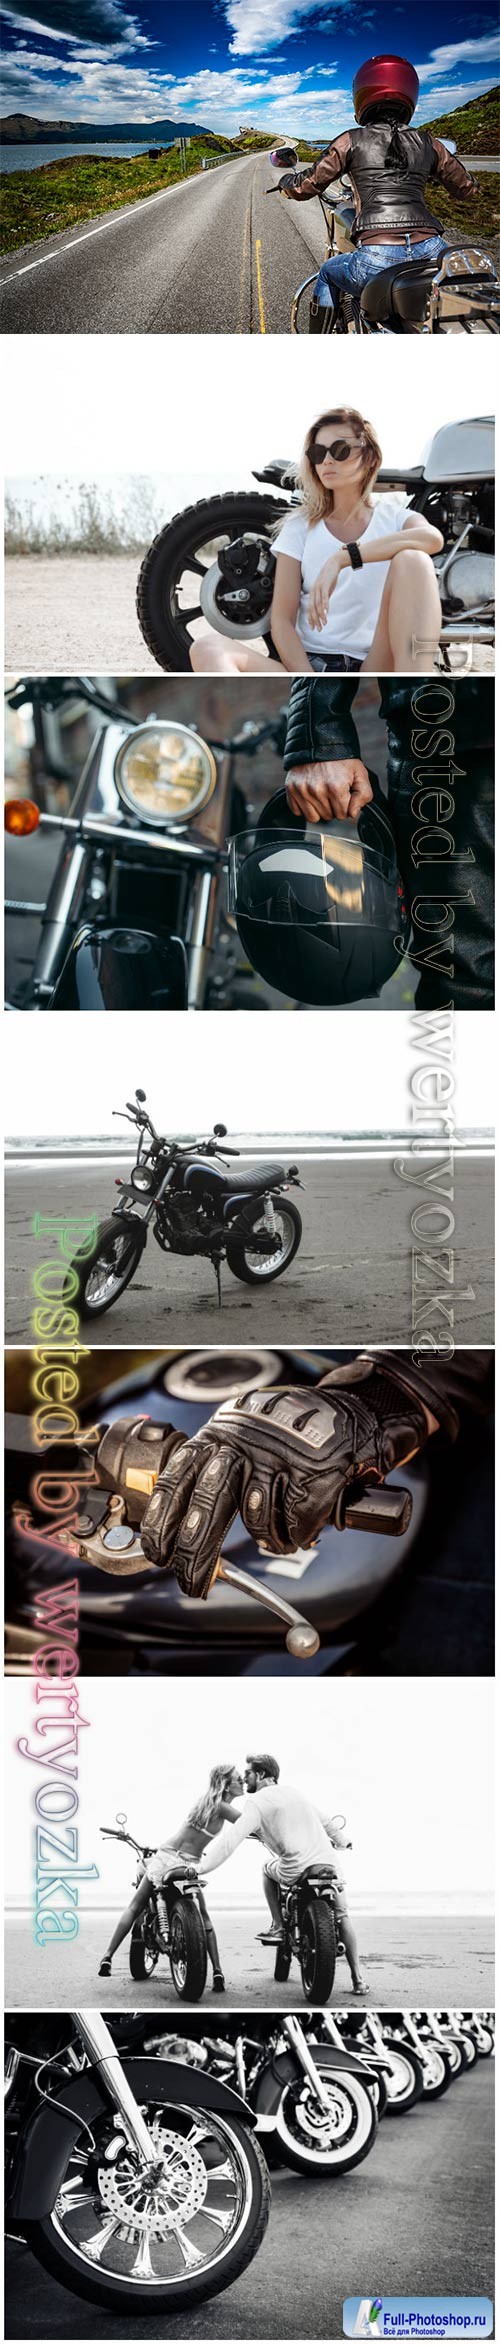 Motorcycles, biker beautiful stock photo